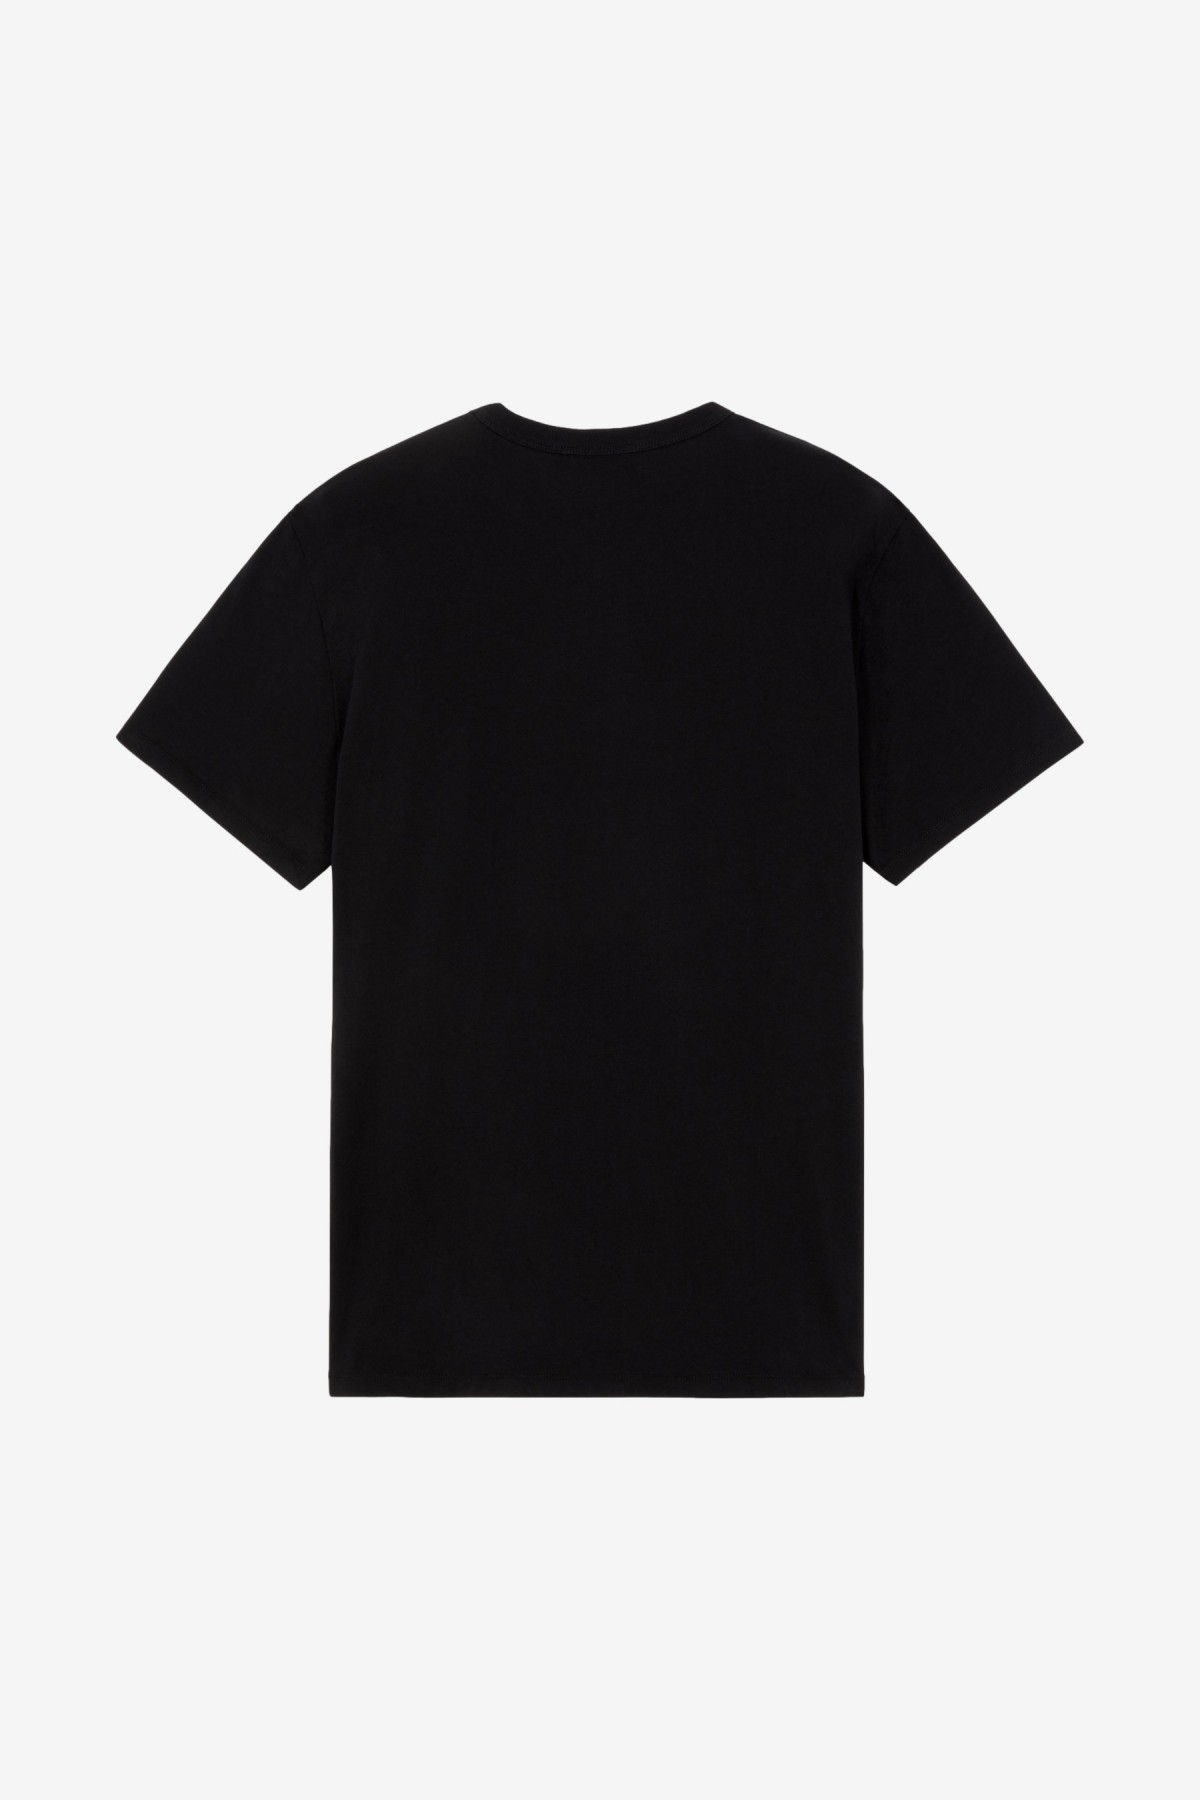 Maison Kitsuné Grey Fox Head Patch Classic Tee-Shirt in Black